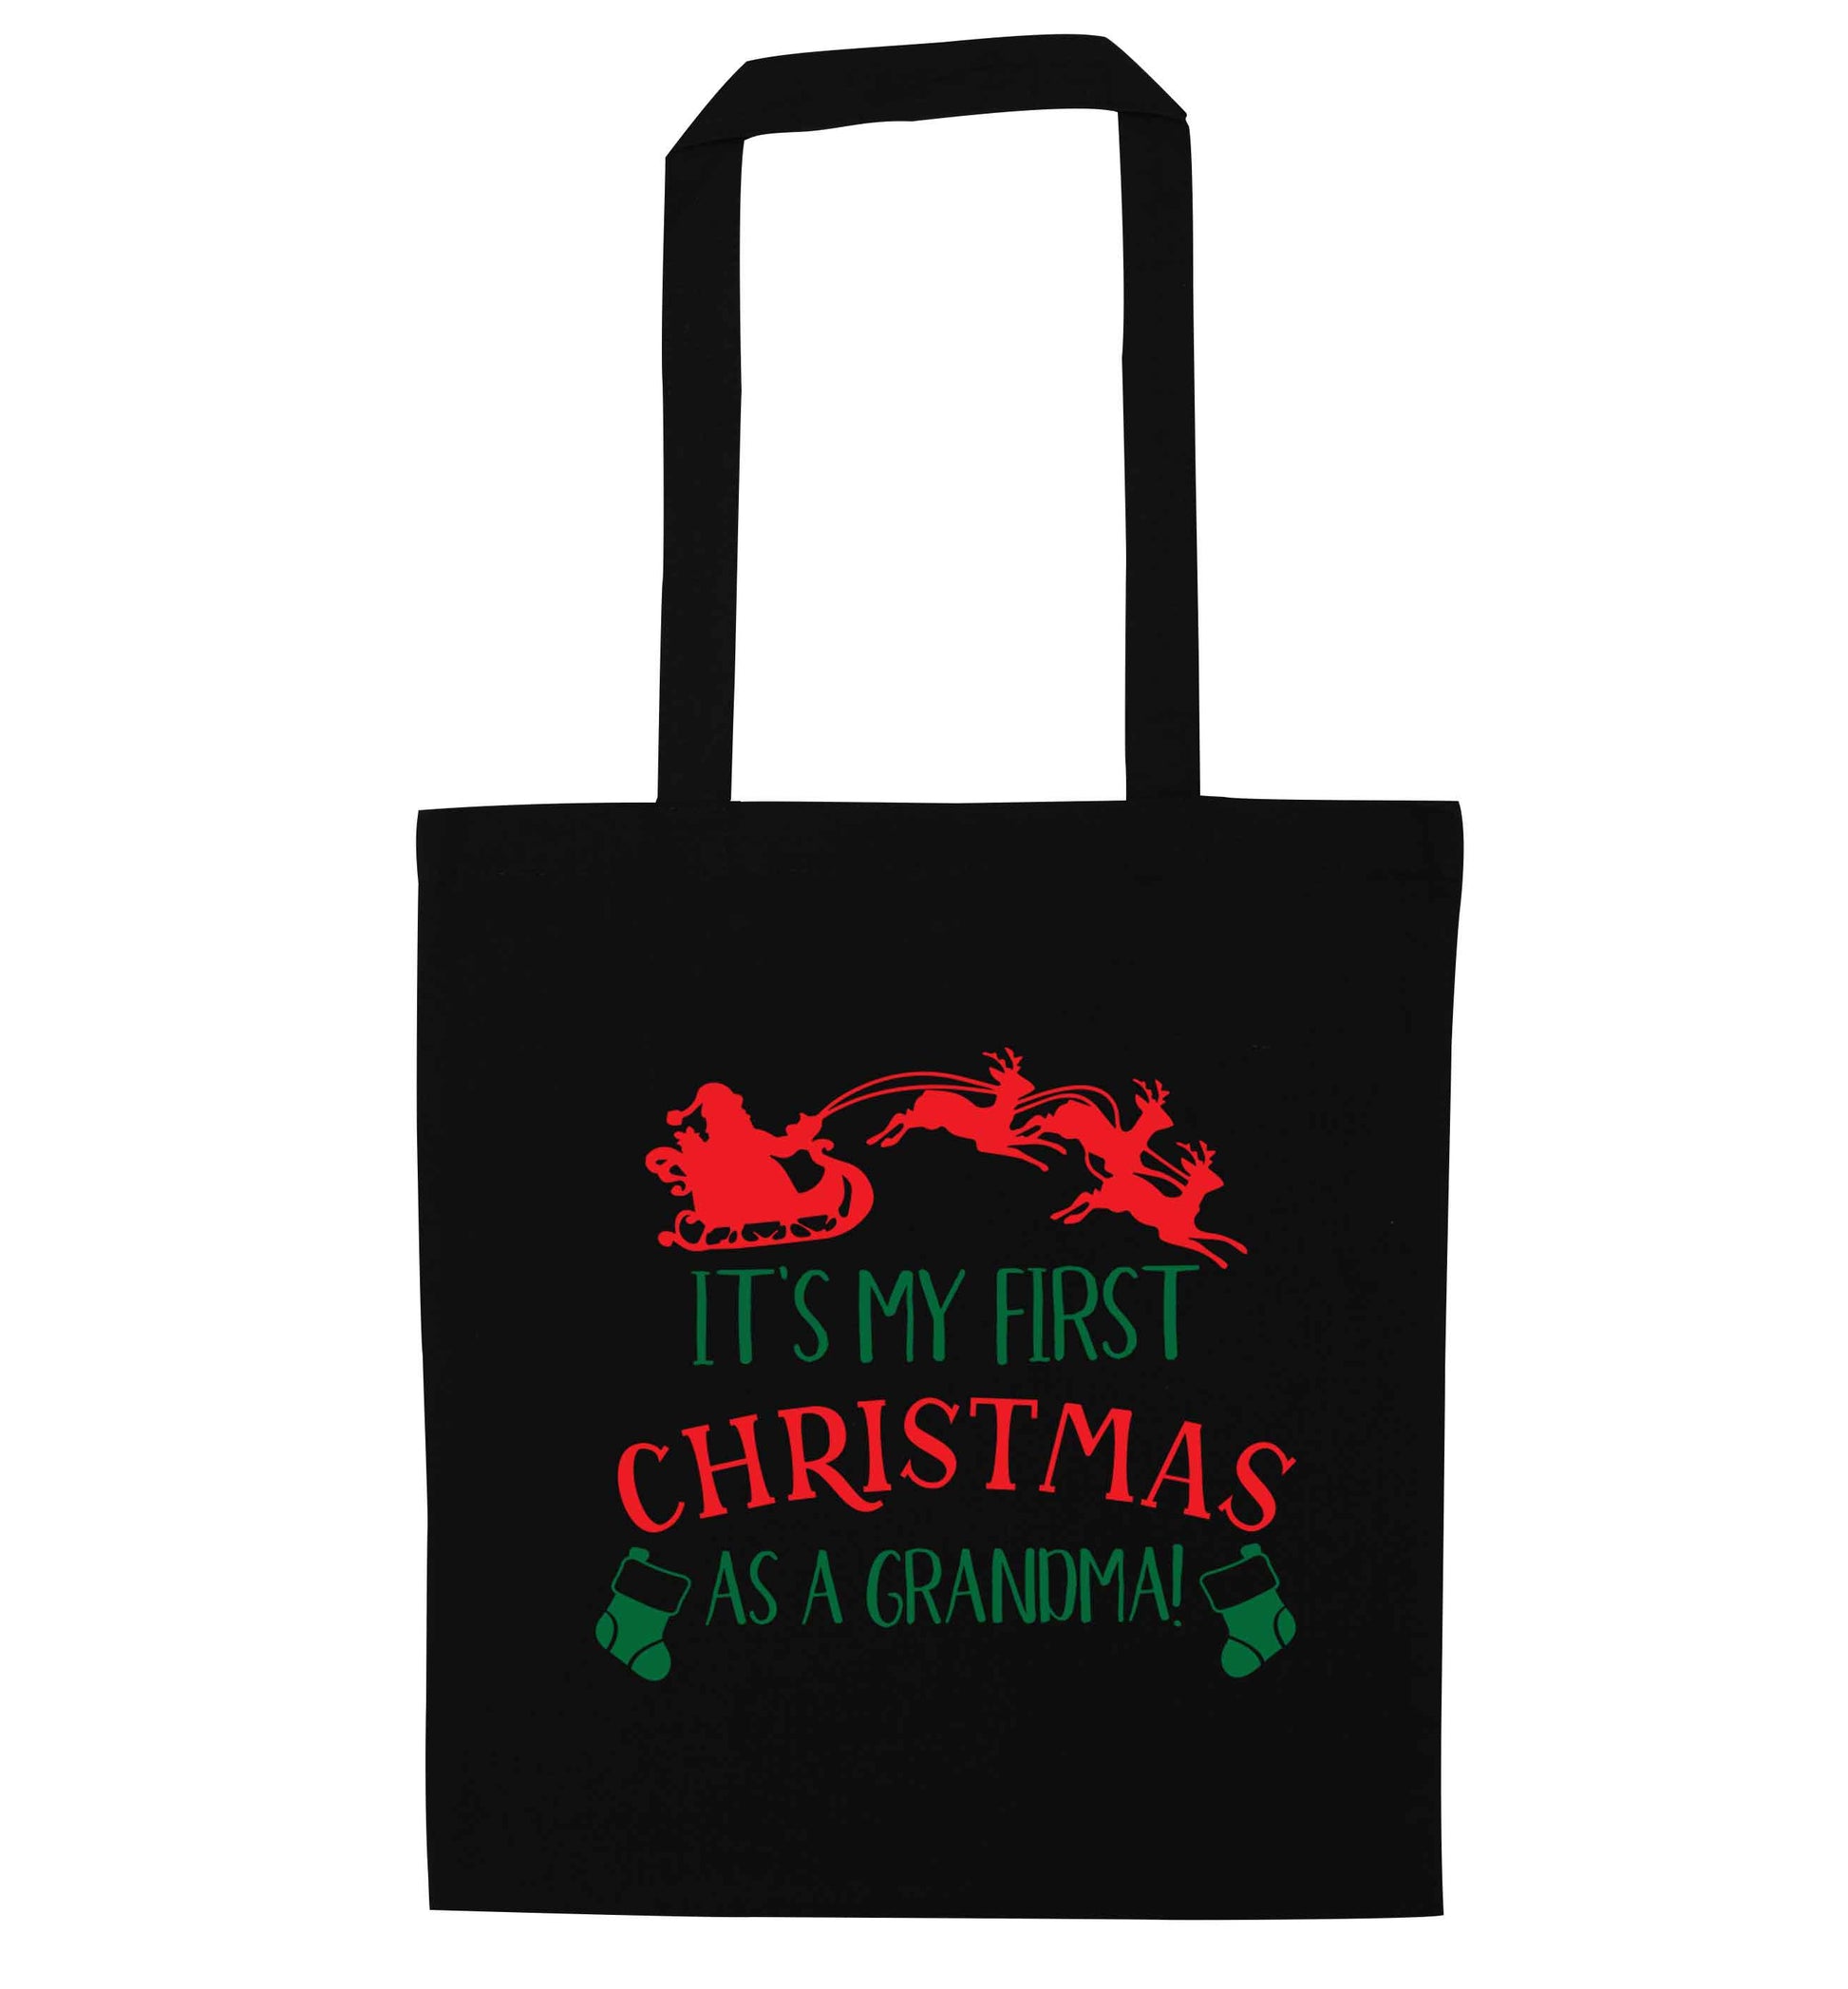 It's my first Christmas as a grandma! black tote bag